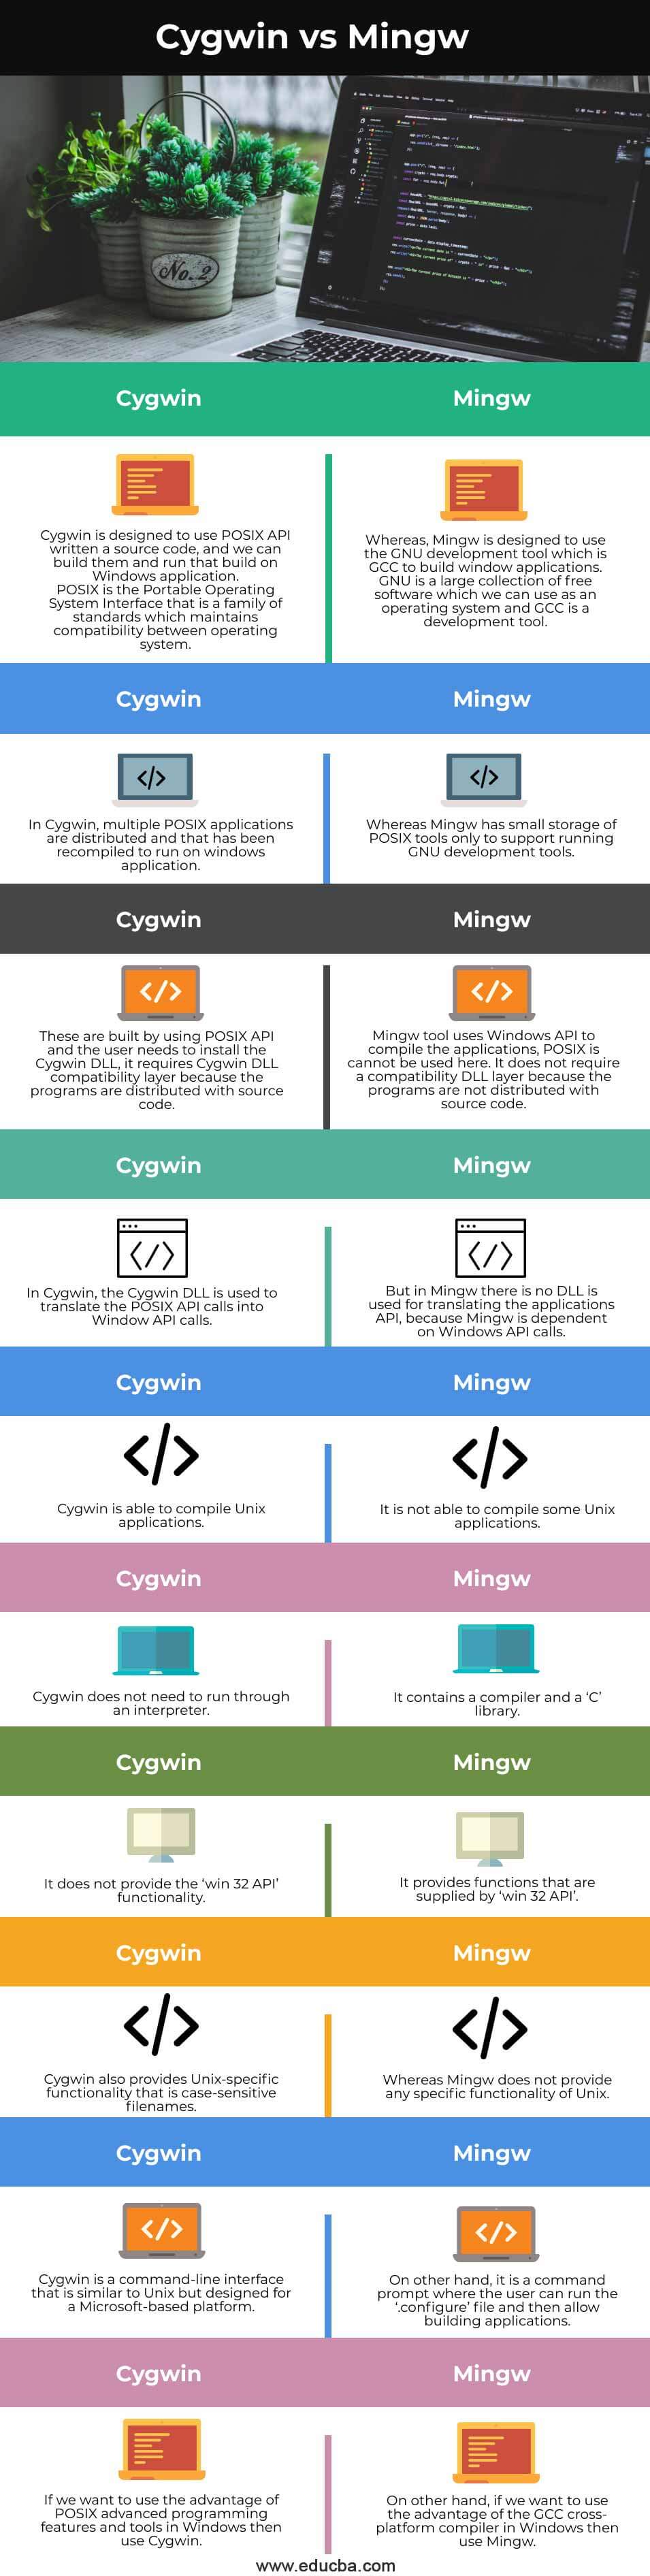 Cygwin-vs-Mingw-info